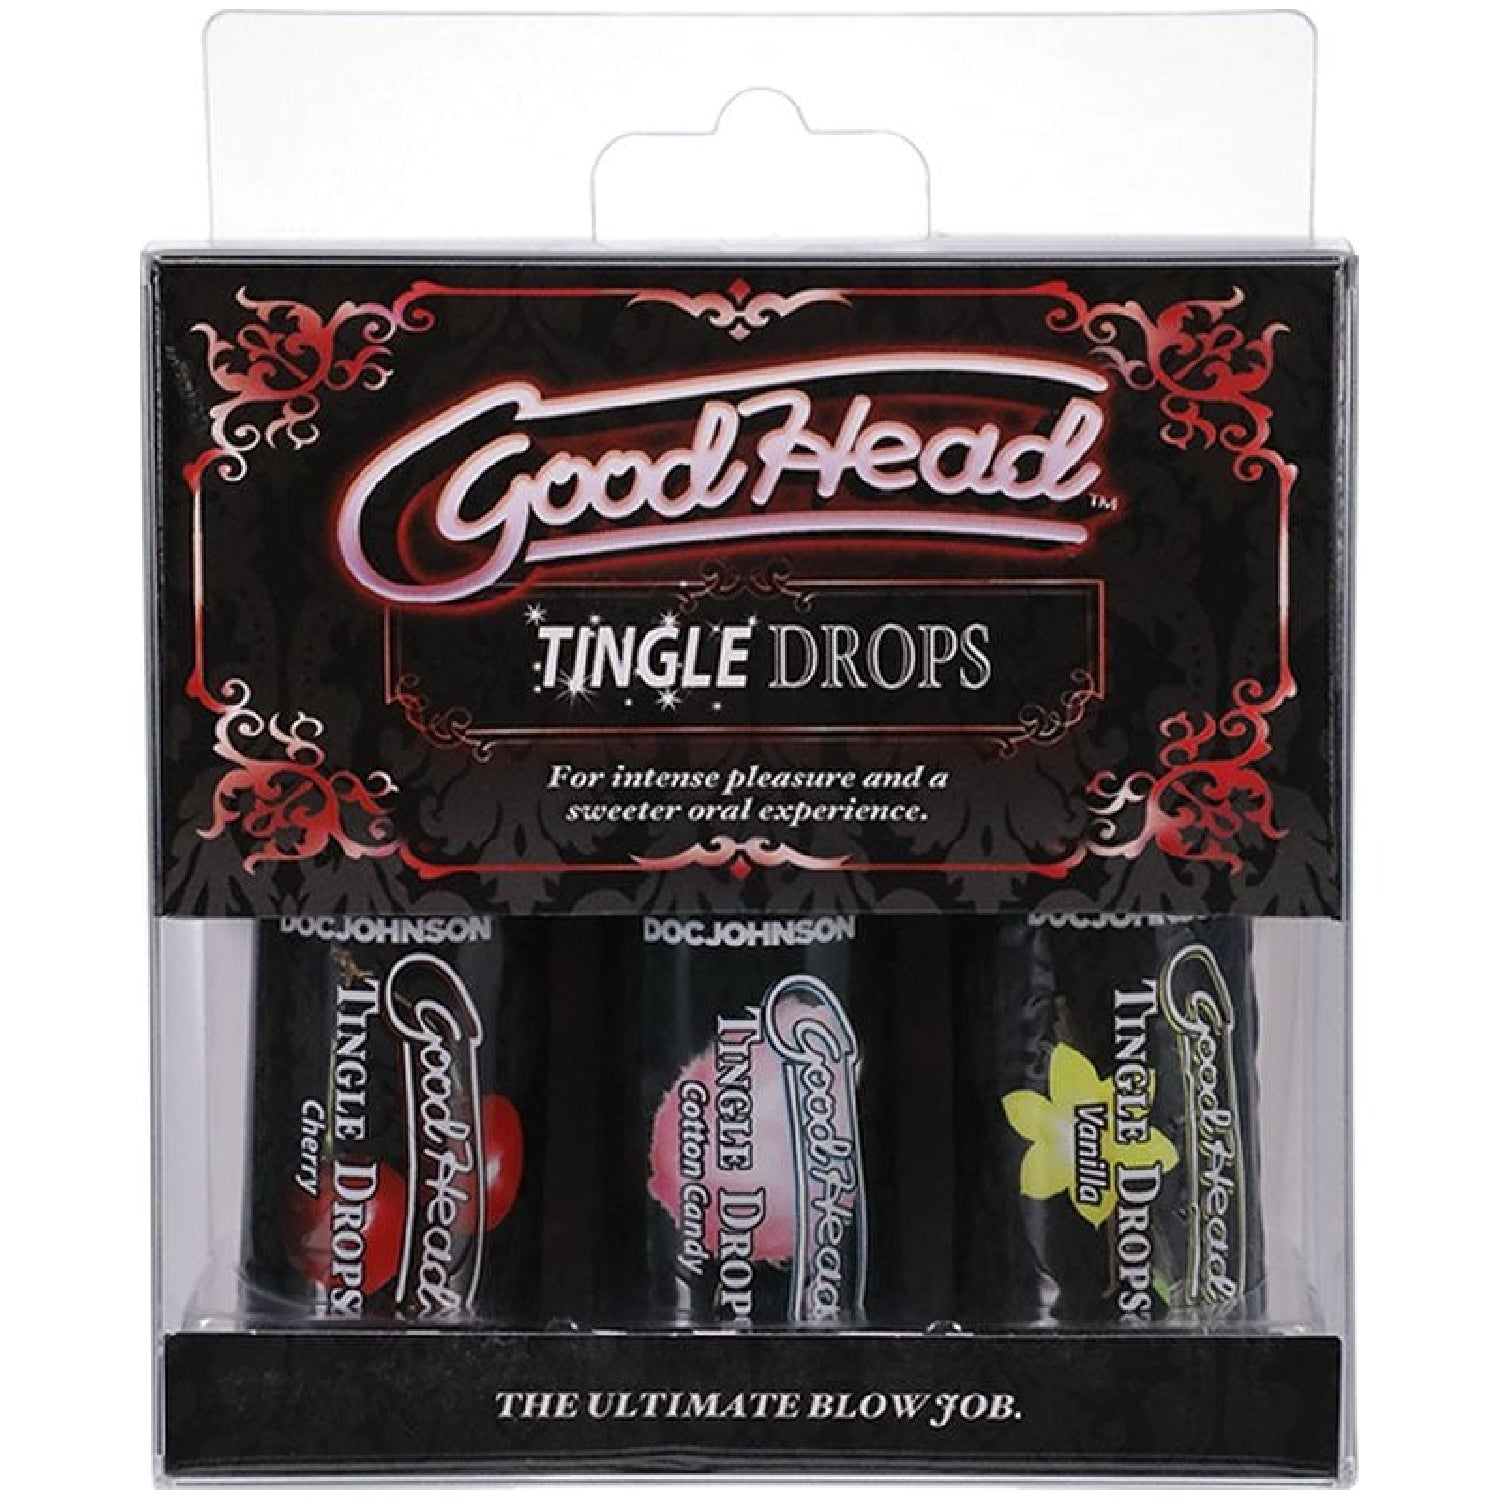 GoodHead - Tingle Drops Cherry, Candy and Vanilla 3 Pieces